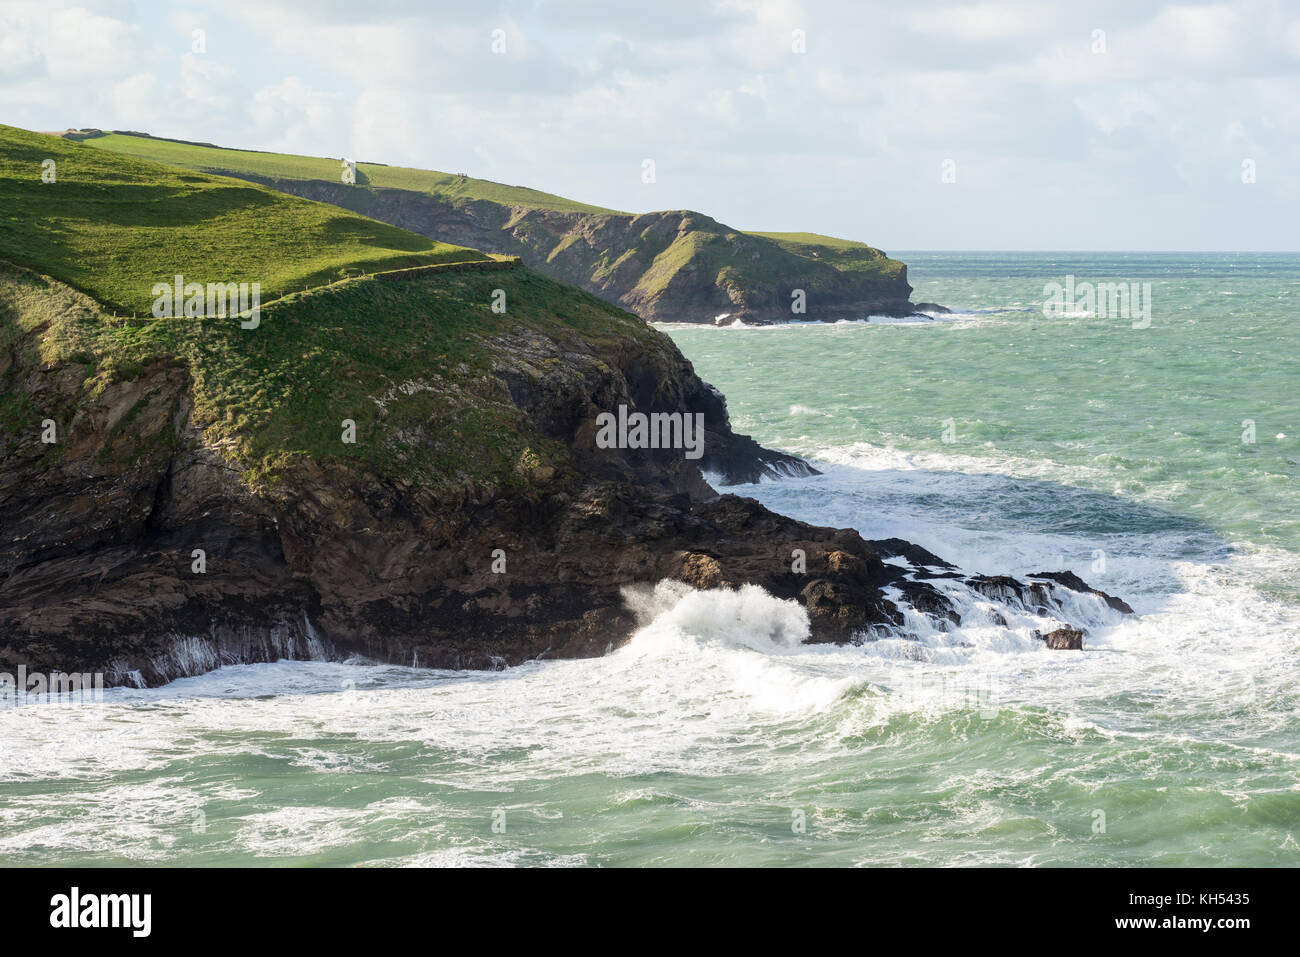 A choppy sea sends waves crashing against the rocks near Port Isaac on the north Cornwall coast, UK, on a sunny autumn day. Stock Photo